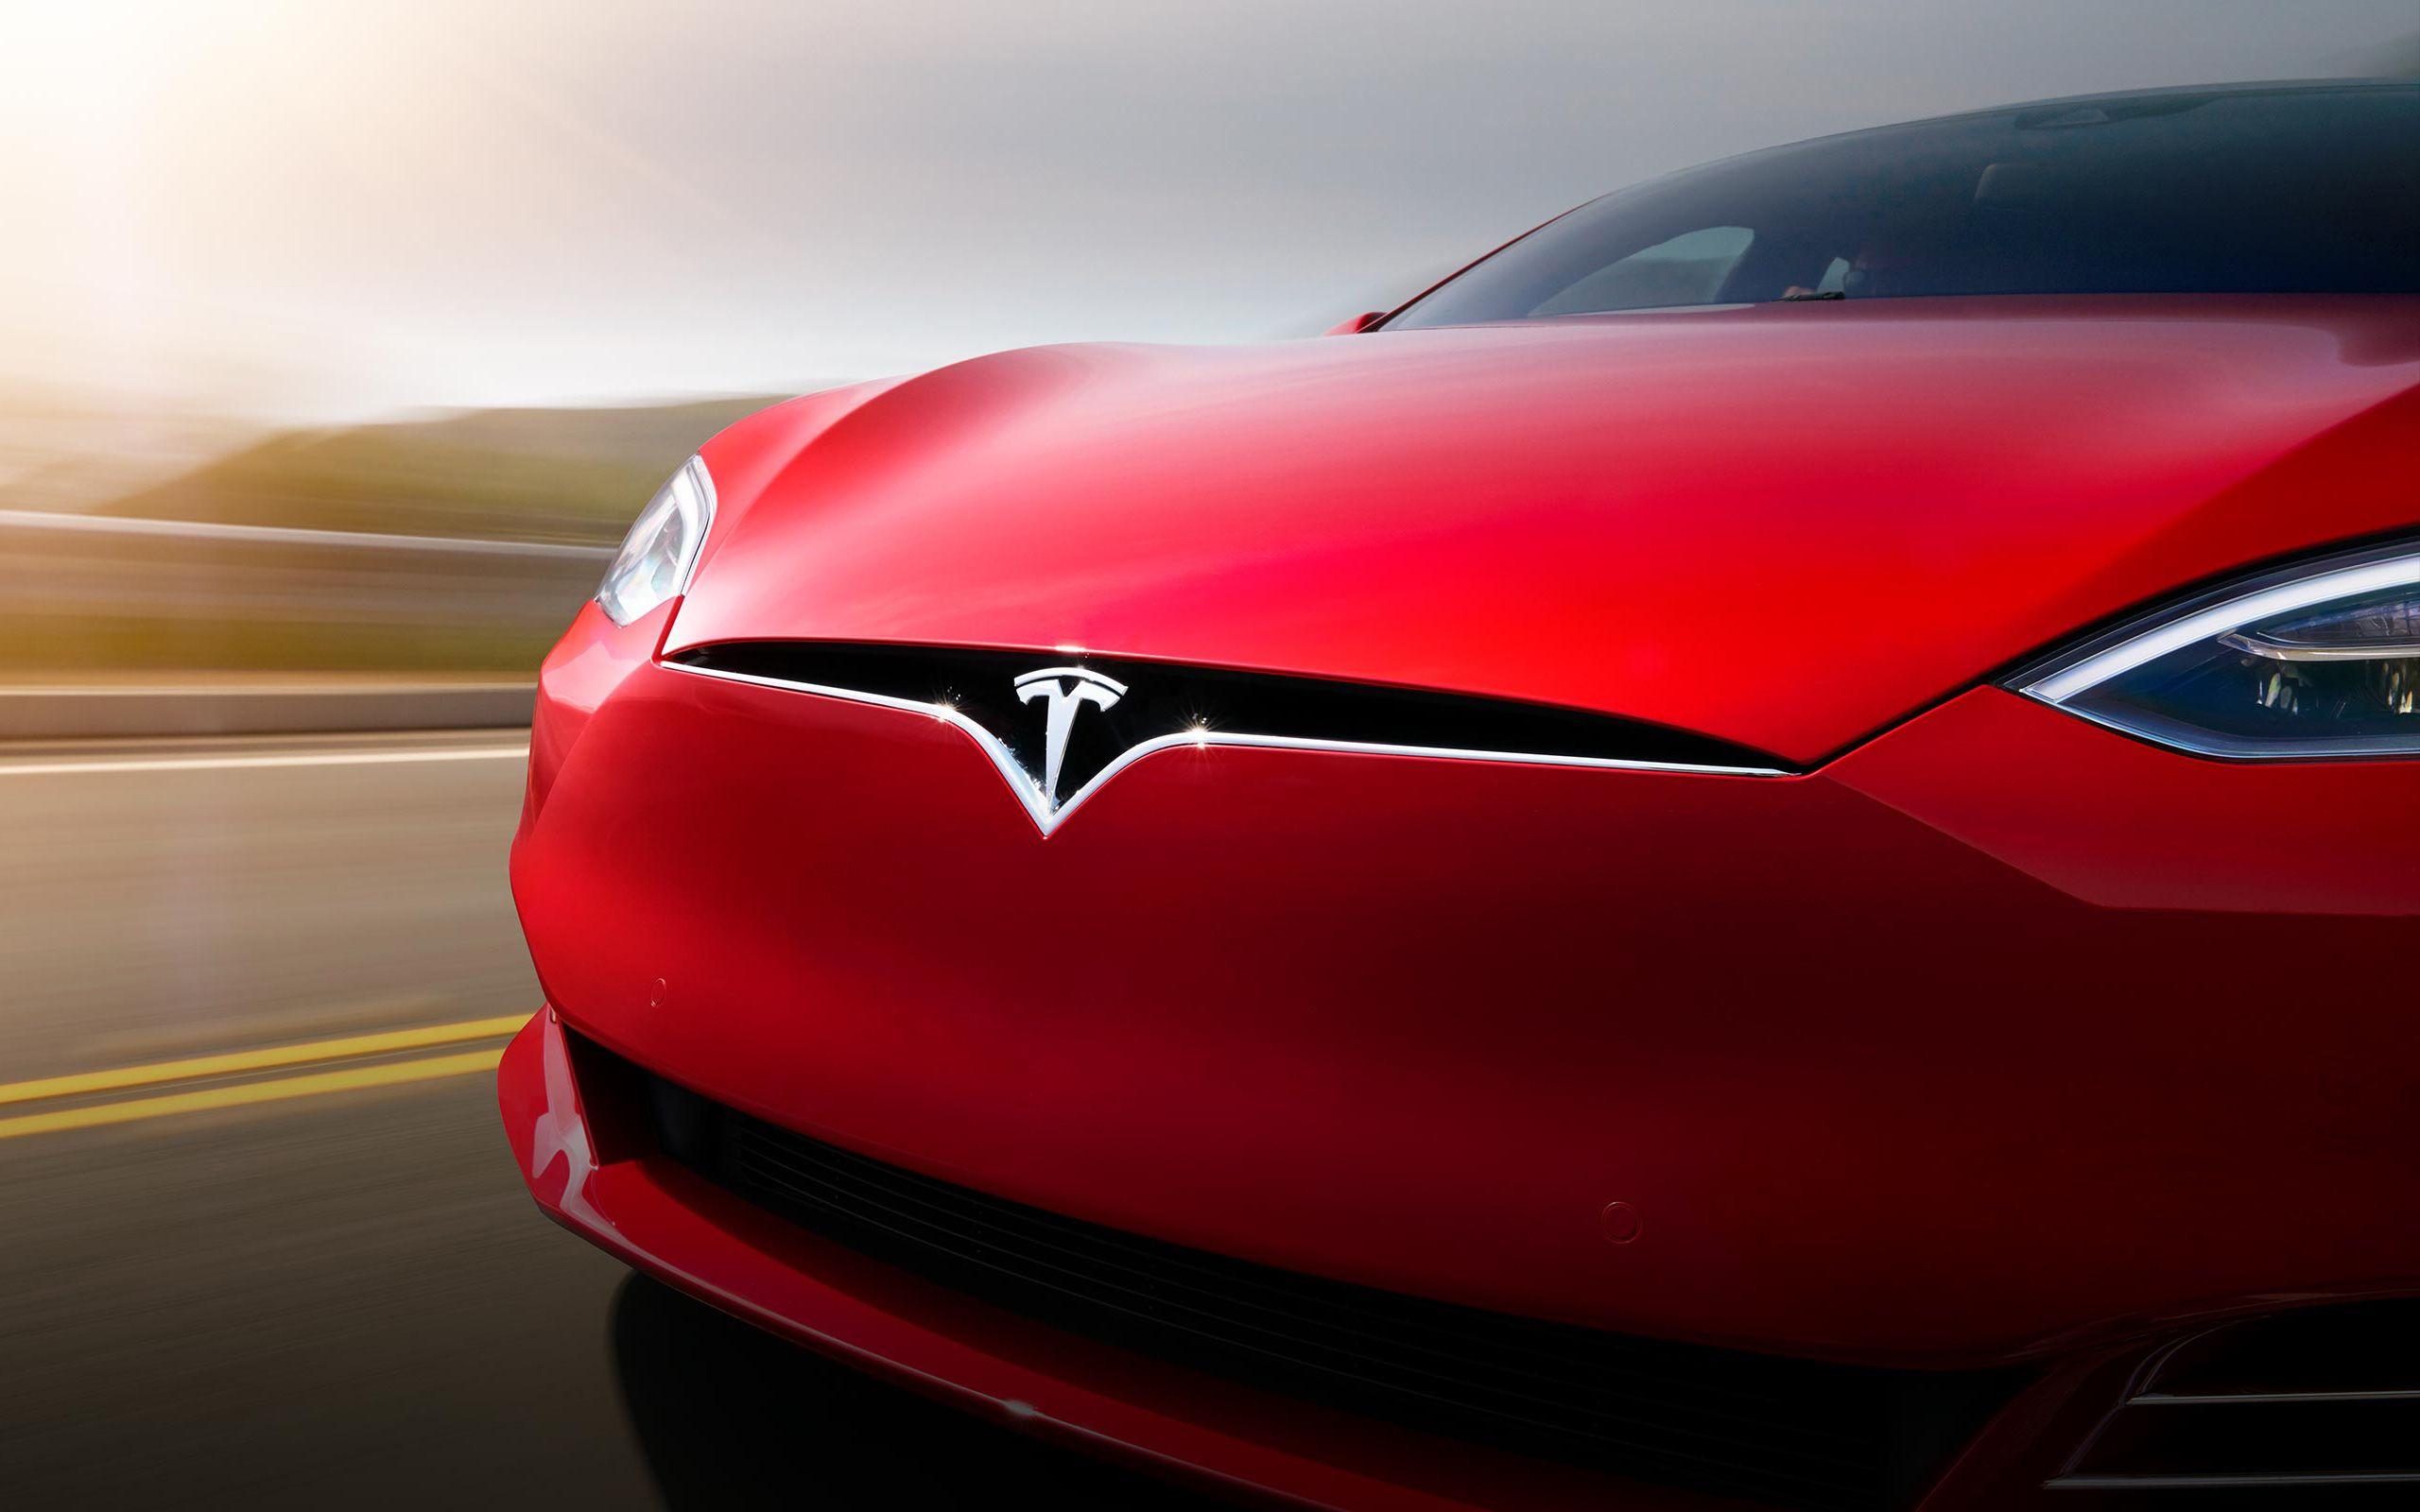 Tesla Car Up Close Wallpaper Background 62153 2560x1600 px